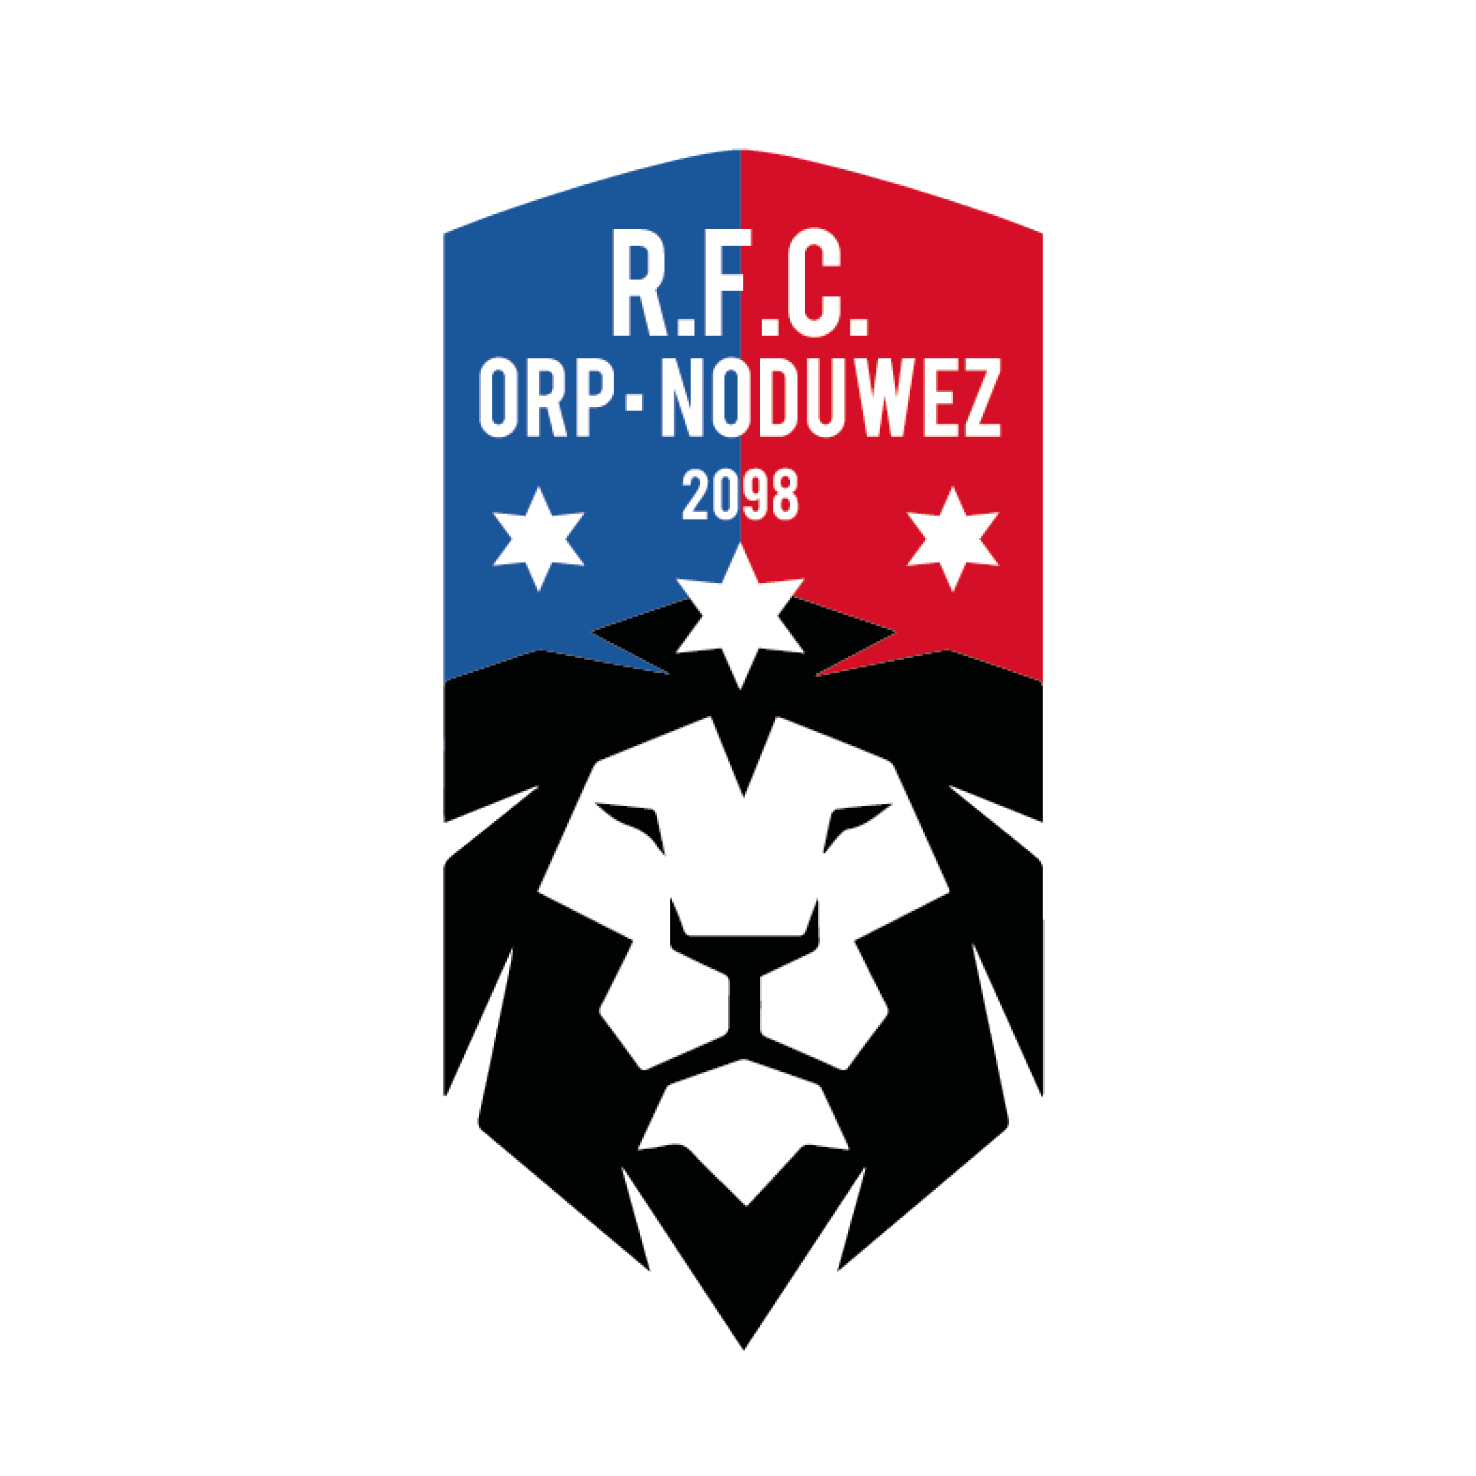 R.F.C. ORP Noduwez